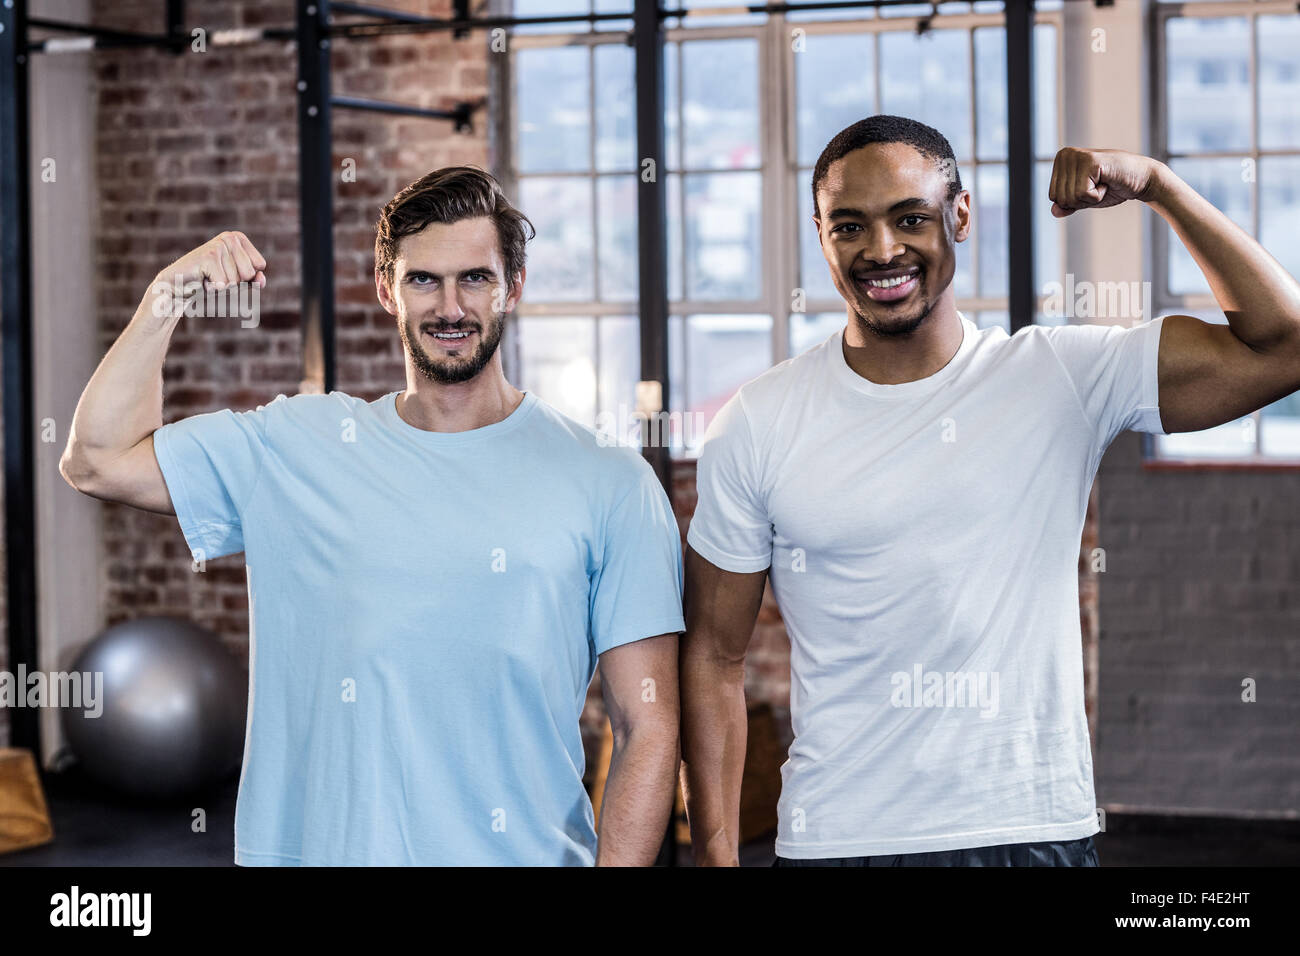 Two muscular men flexing biceps Stock Photo